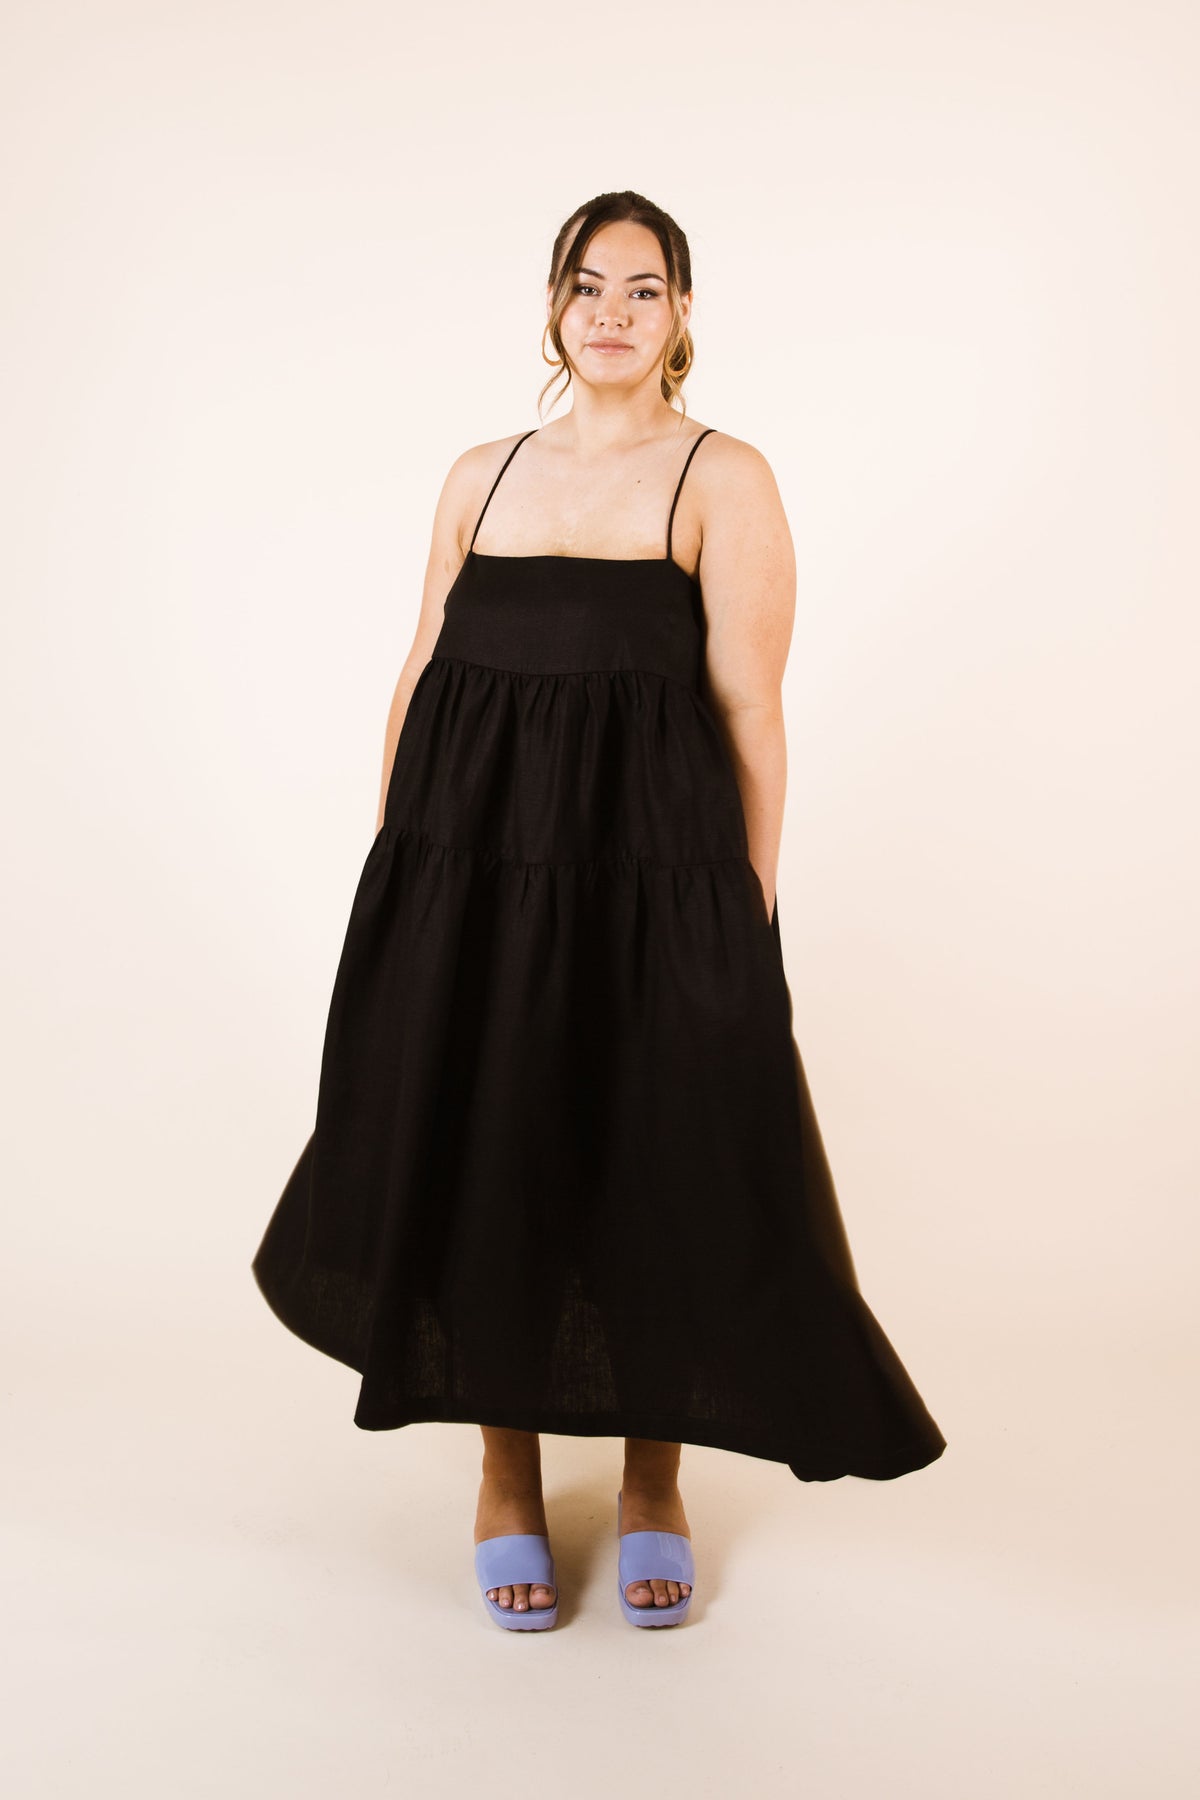 Celestia Dress - Size 1-14